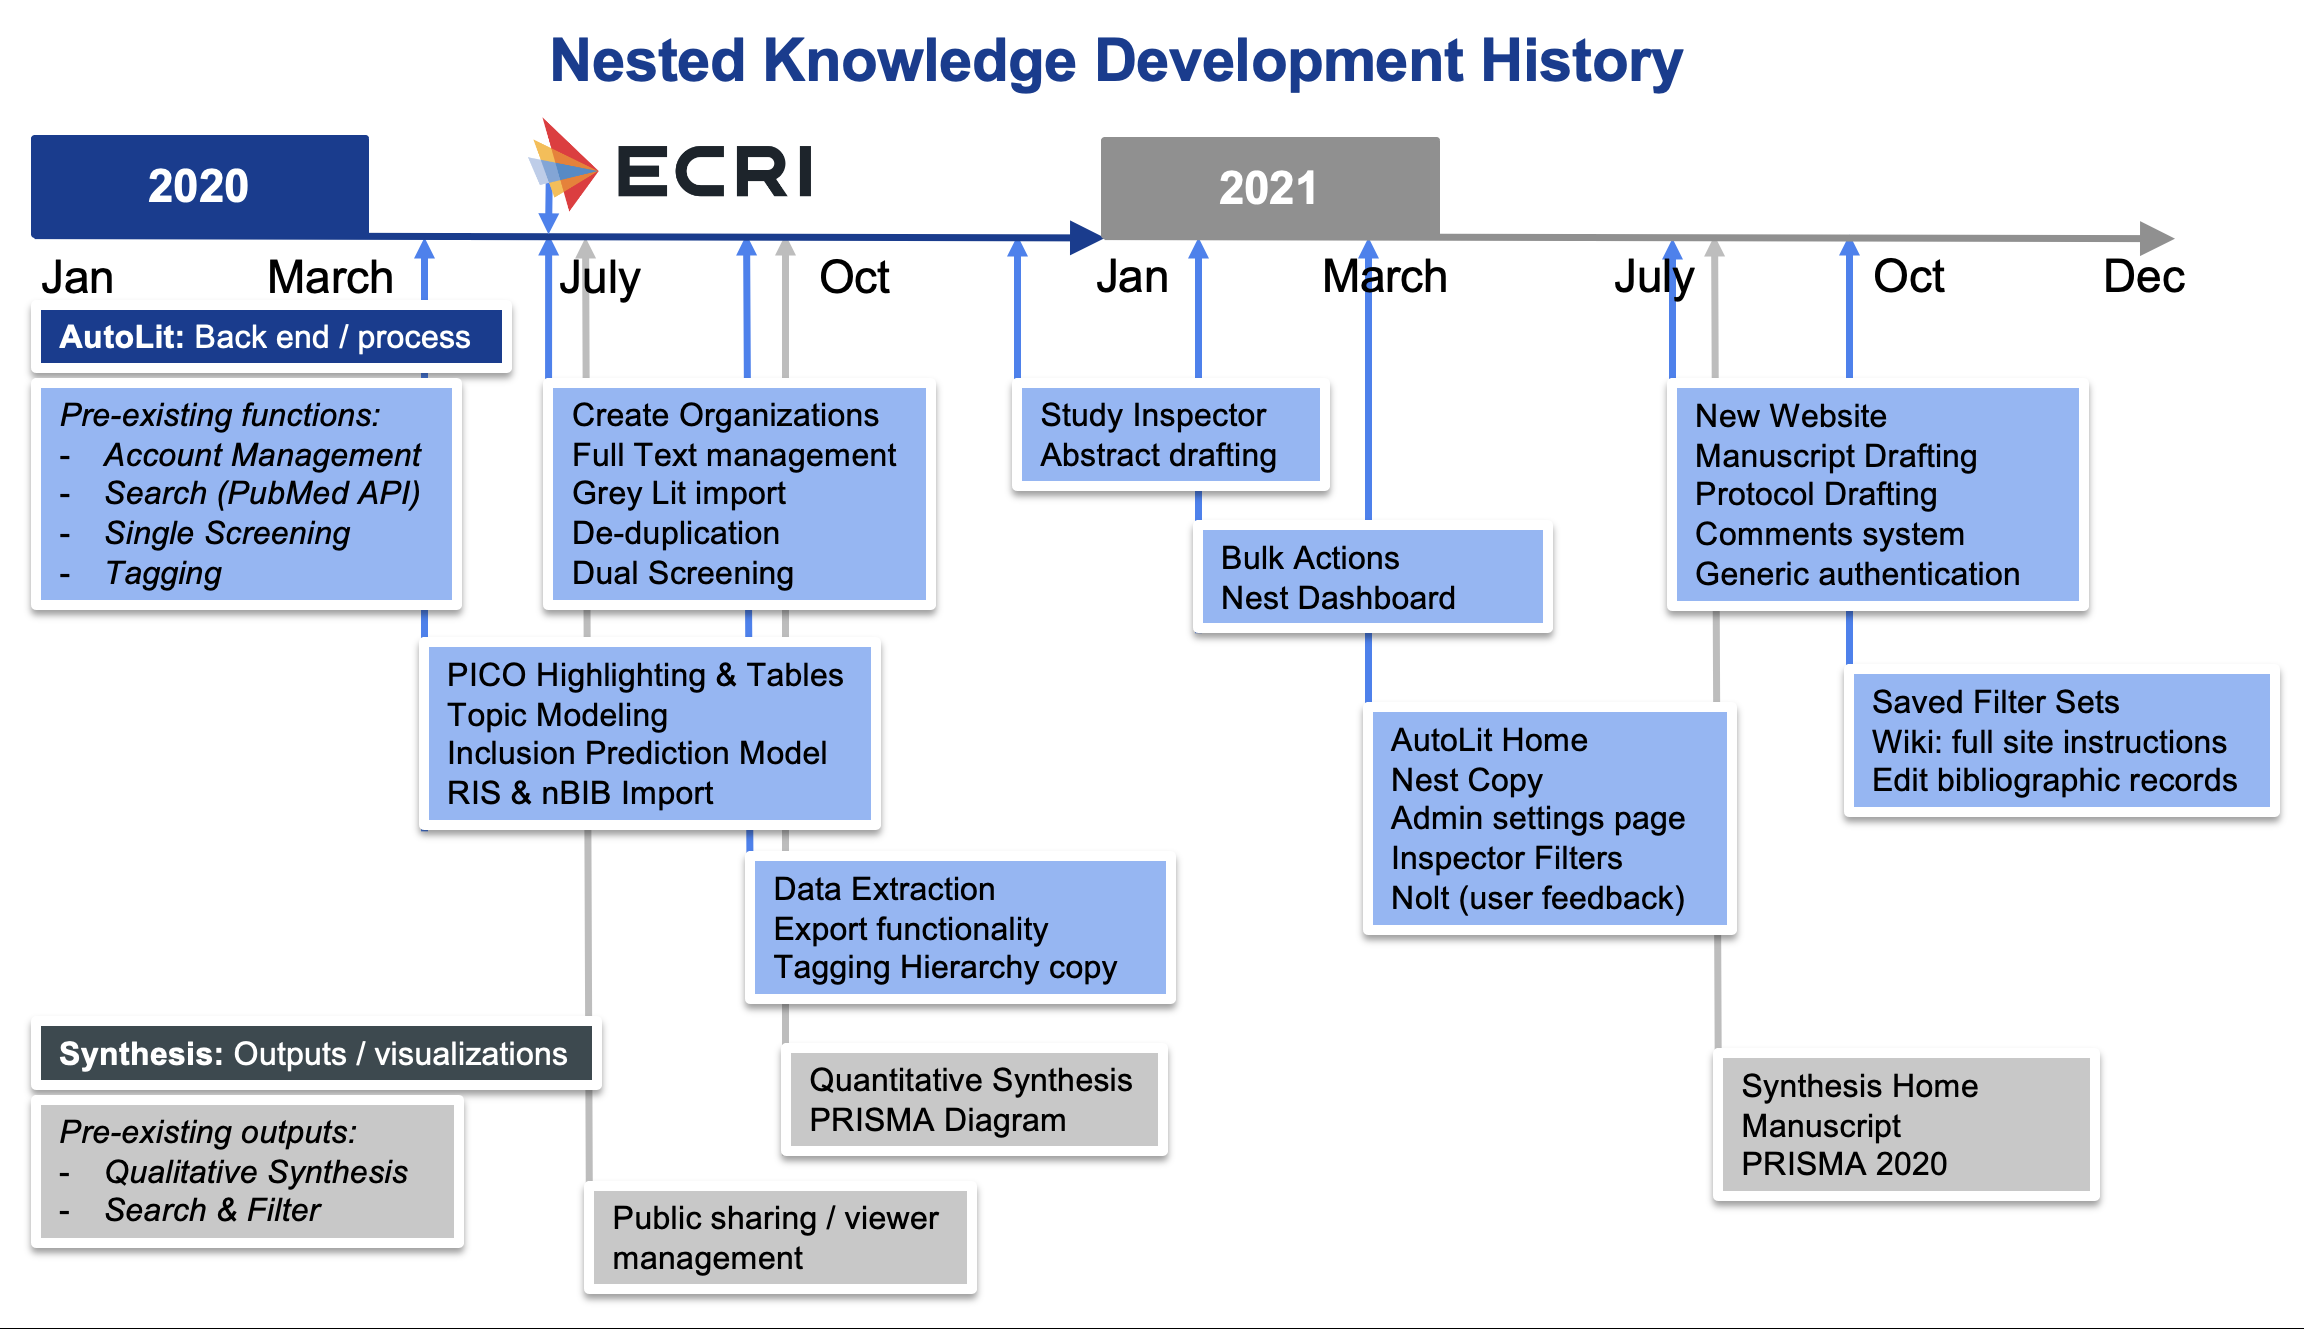 Nested Knowledge Development Timeline - 2020-2022